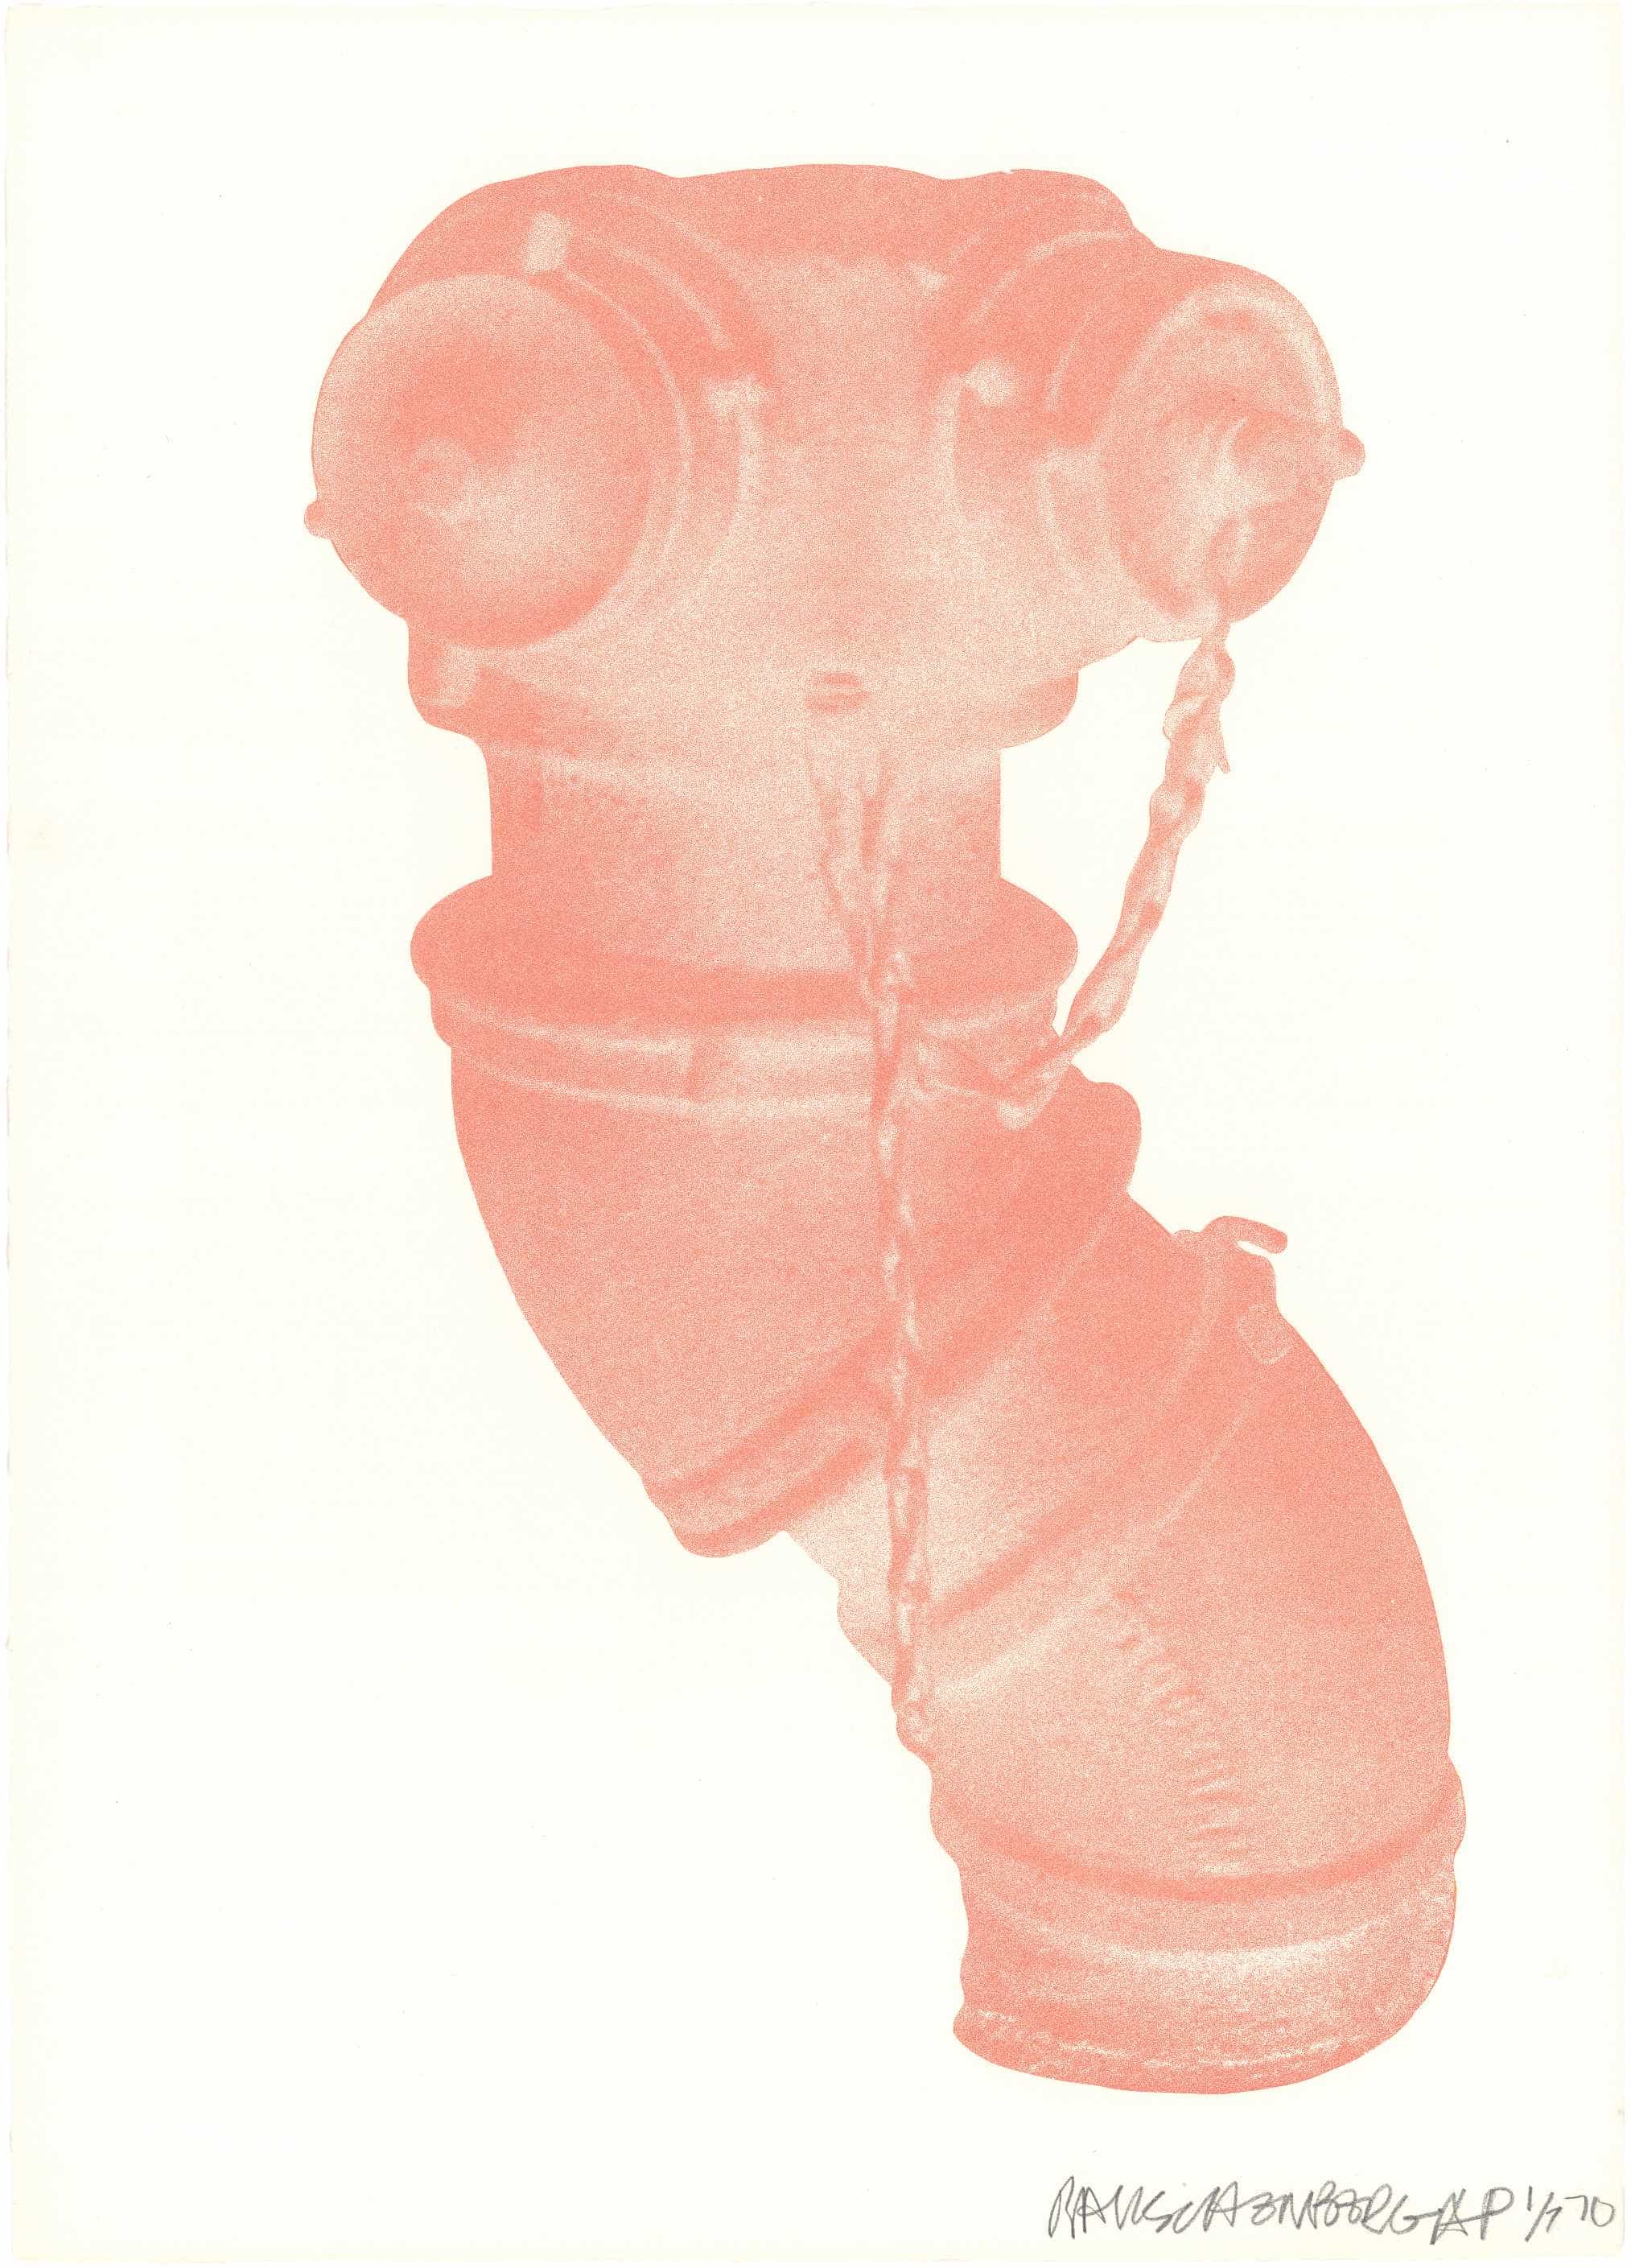 Robert Rauschenberg, Unit (Hydrant), 1970